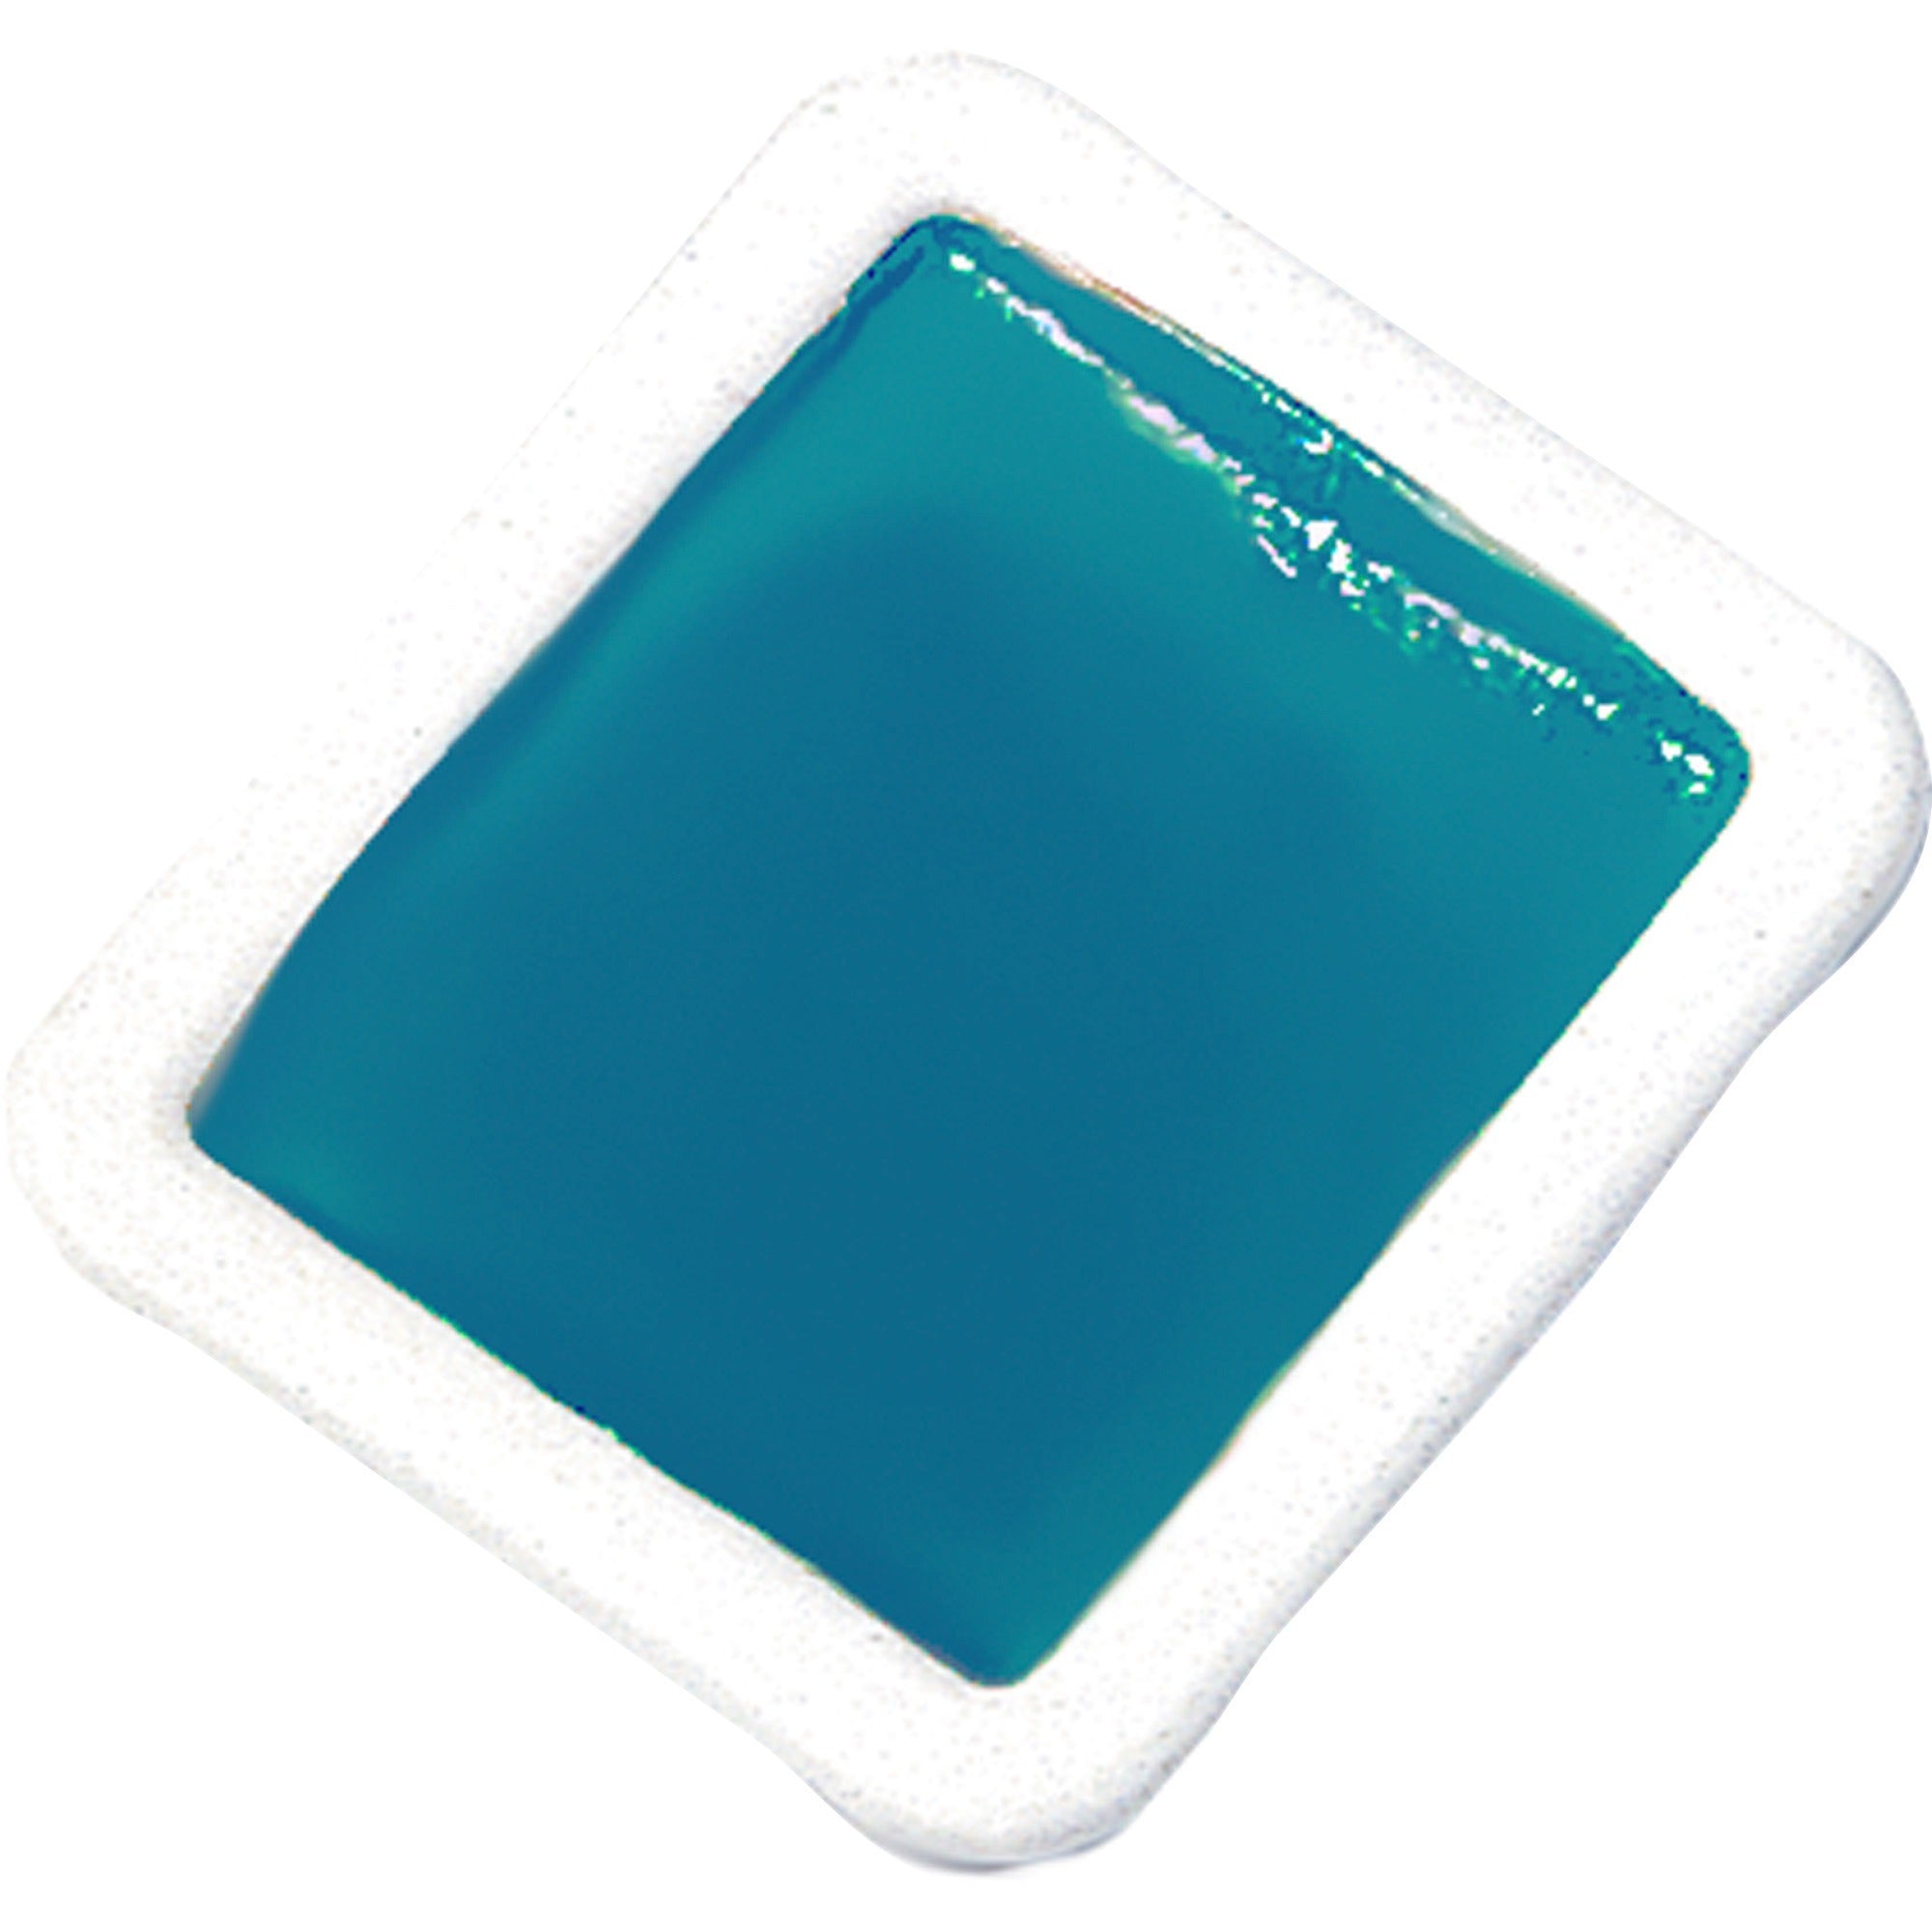 prang-half-pan-watercolors-refill-1-dozen-turquoise-blue_dixx8019 - 1